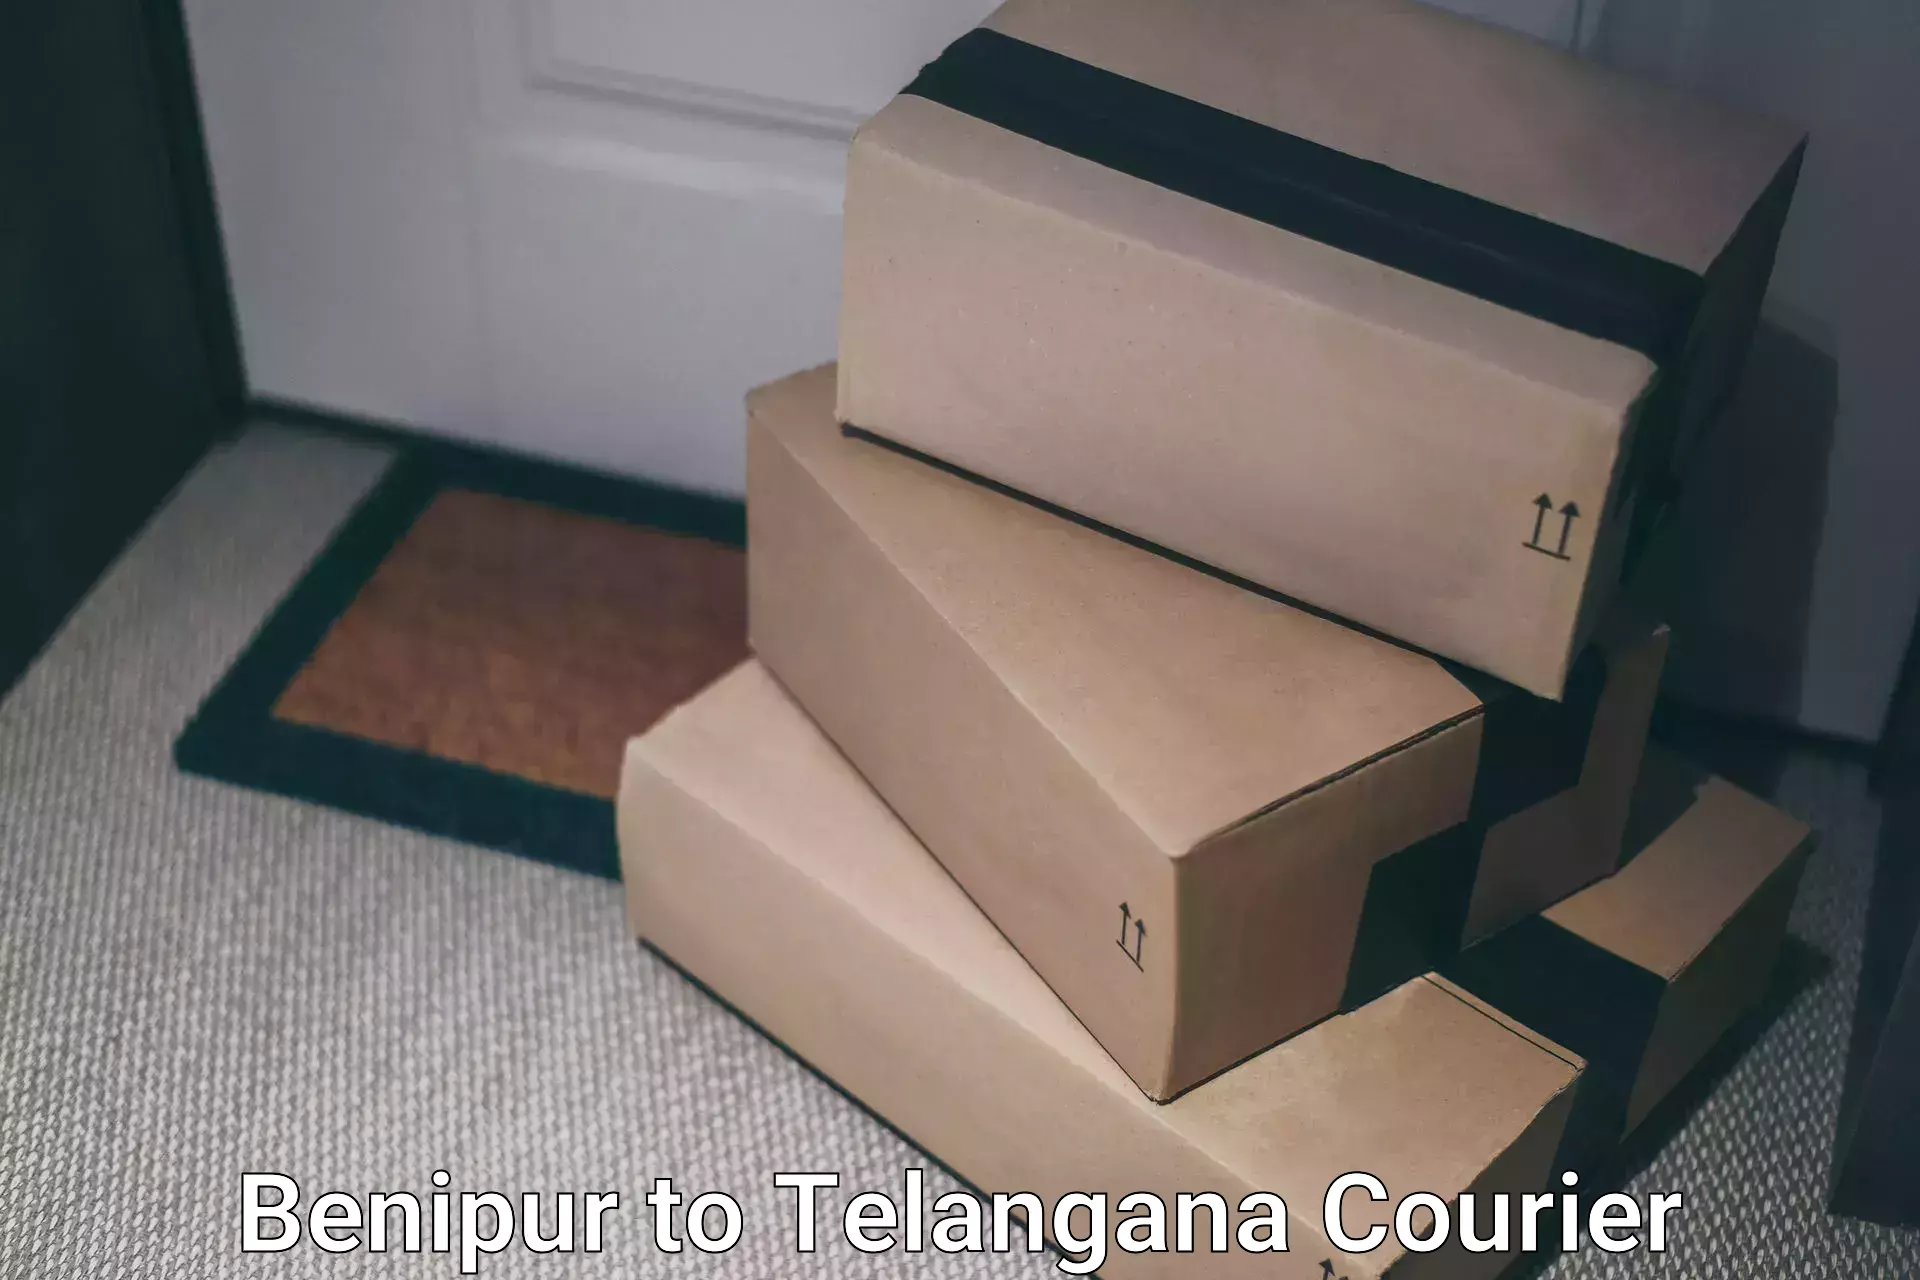 International courier rates Benipur to Nereducharla